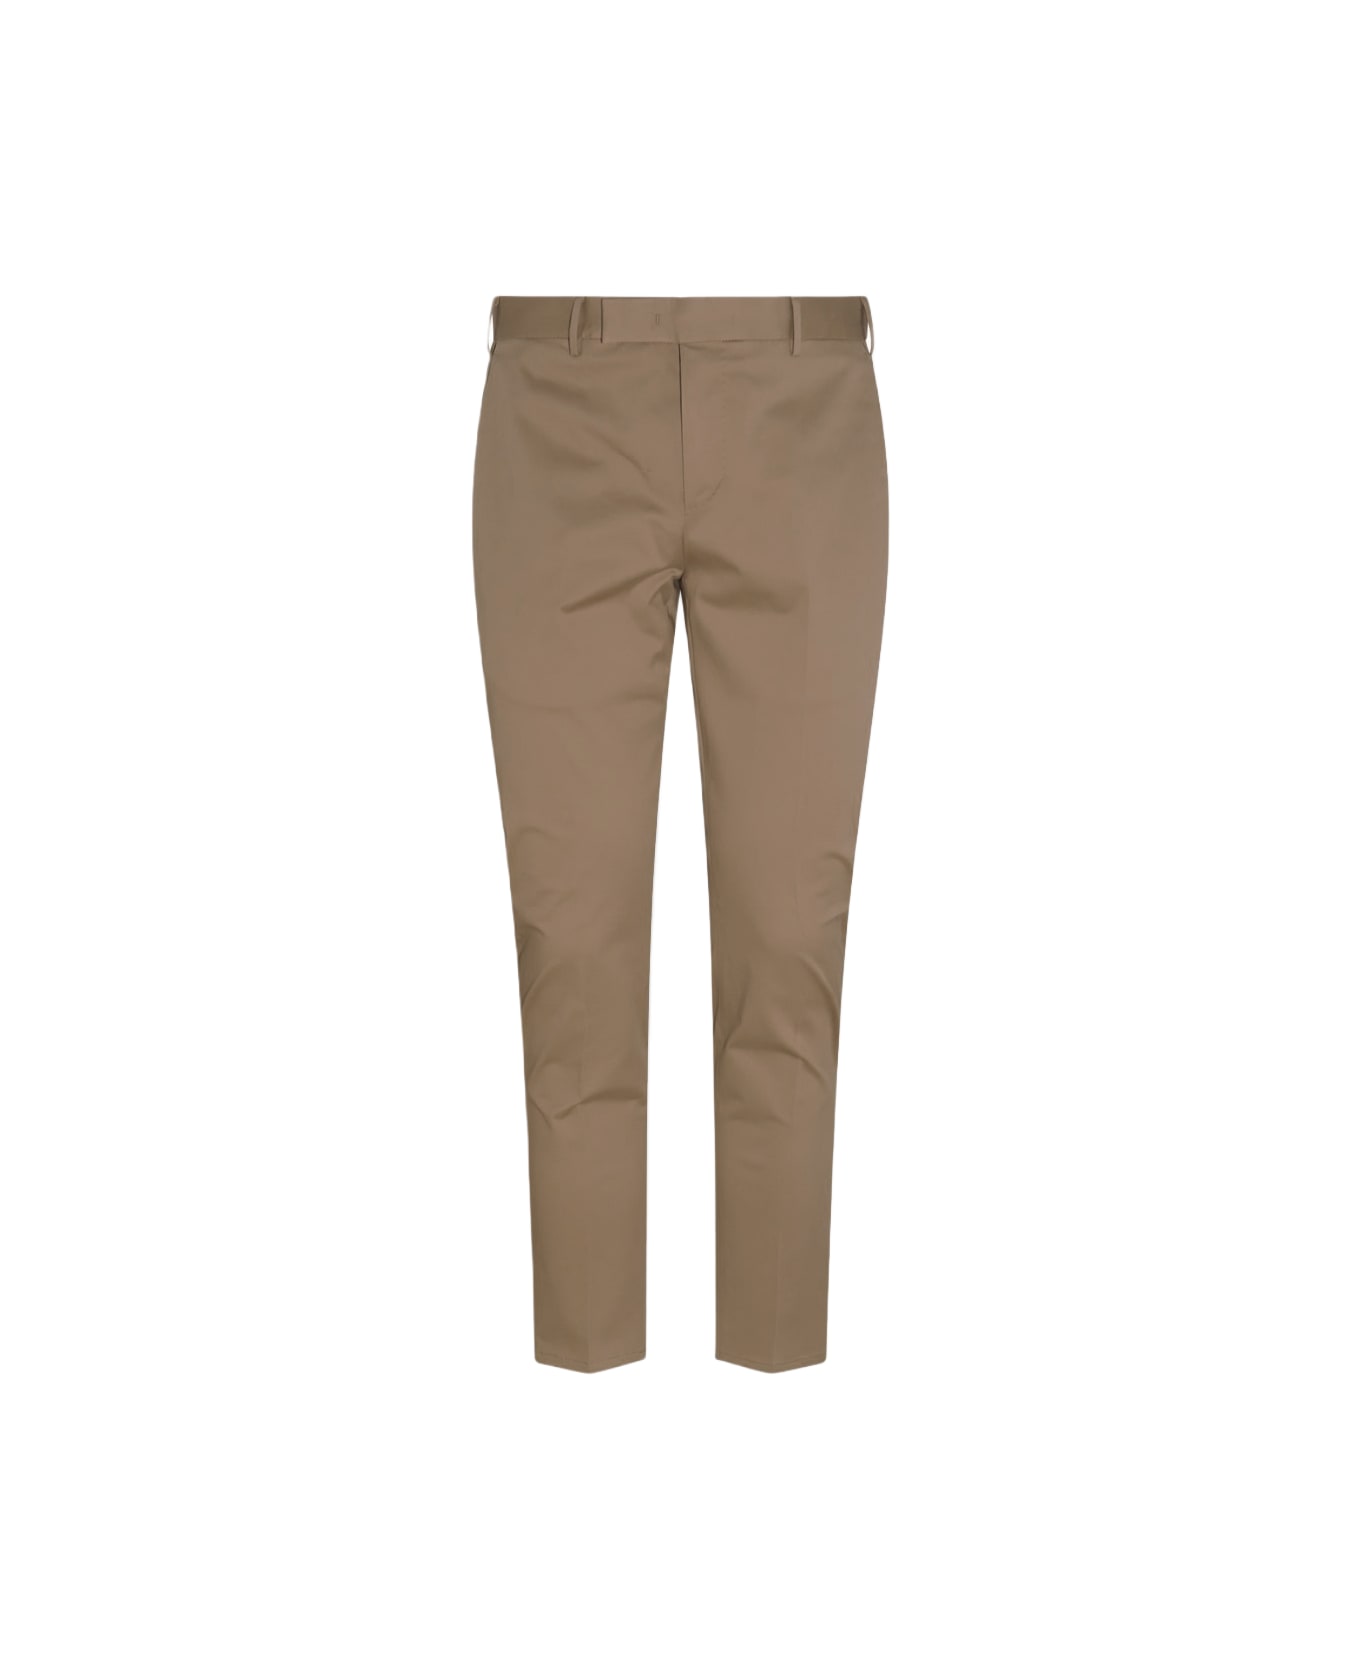 PT Torino Beige Cotton Pants - Brown